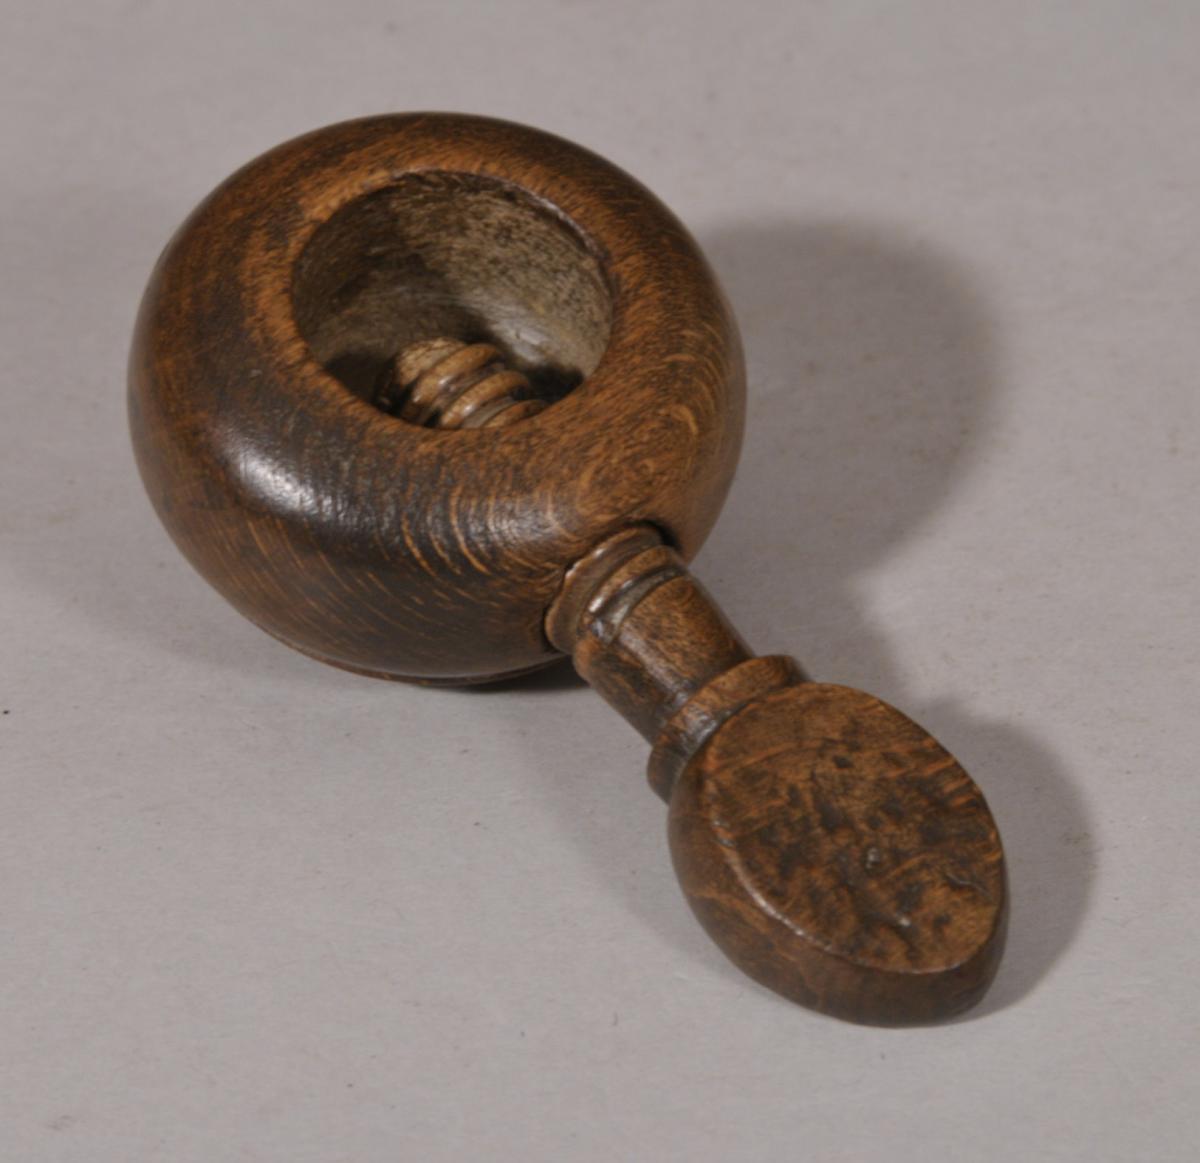 S/5800 Antique Treen 19th Century Small Victorian Beech Pocket Nutcracker